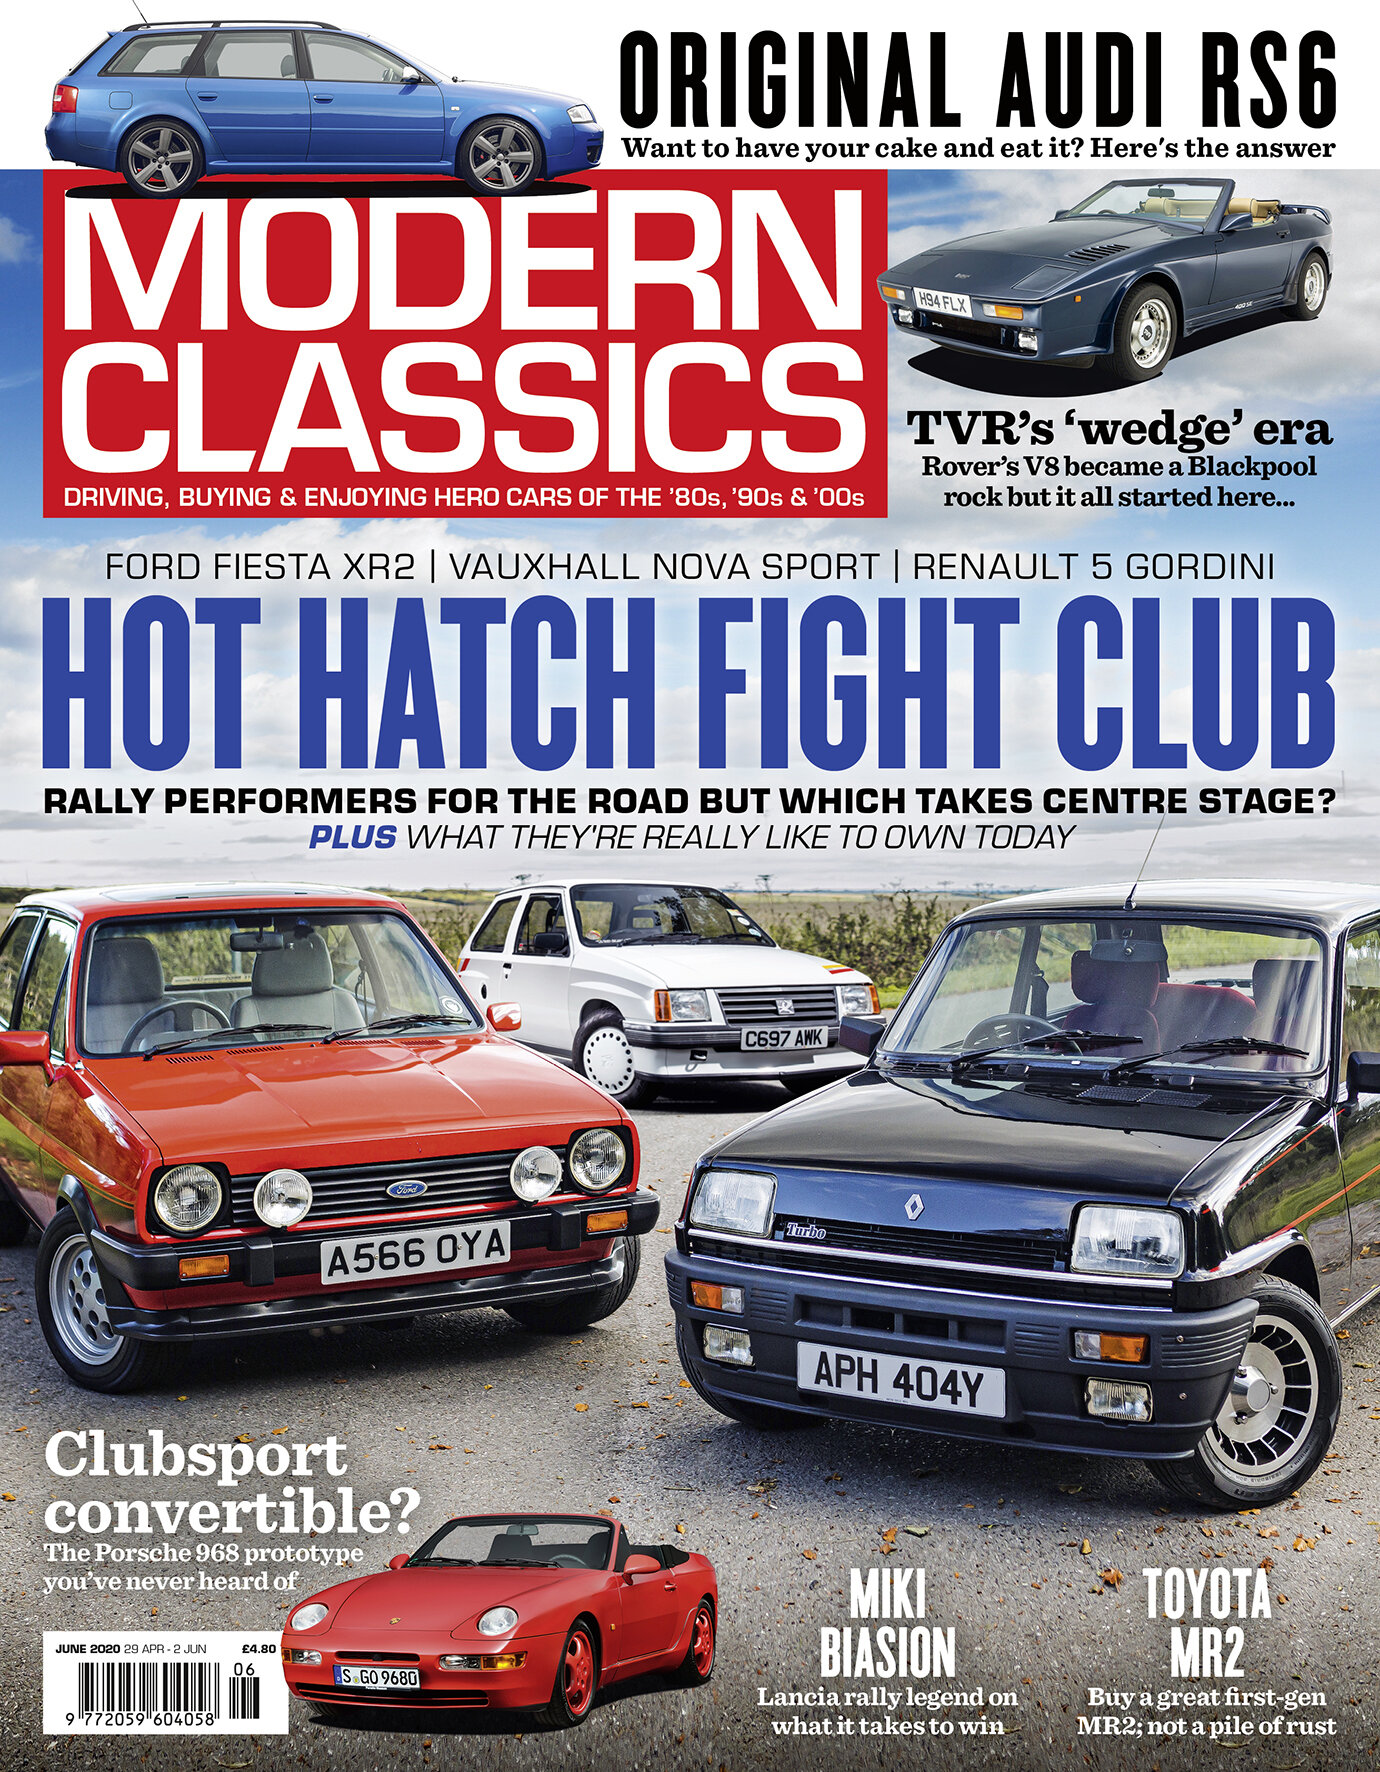 Modern Classics magazine, June 2020 edition